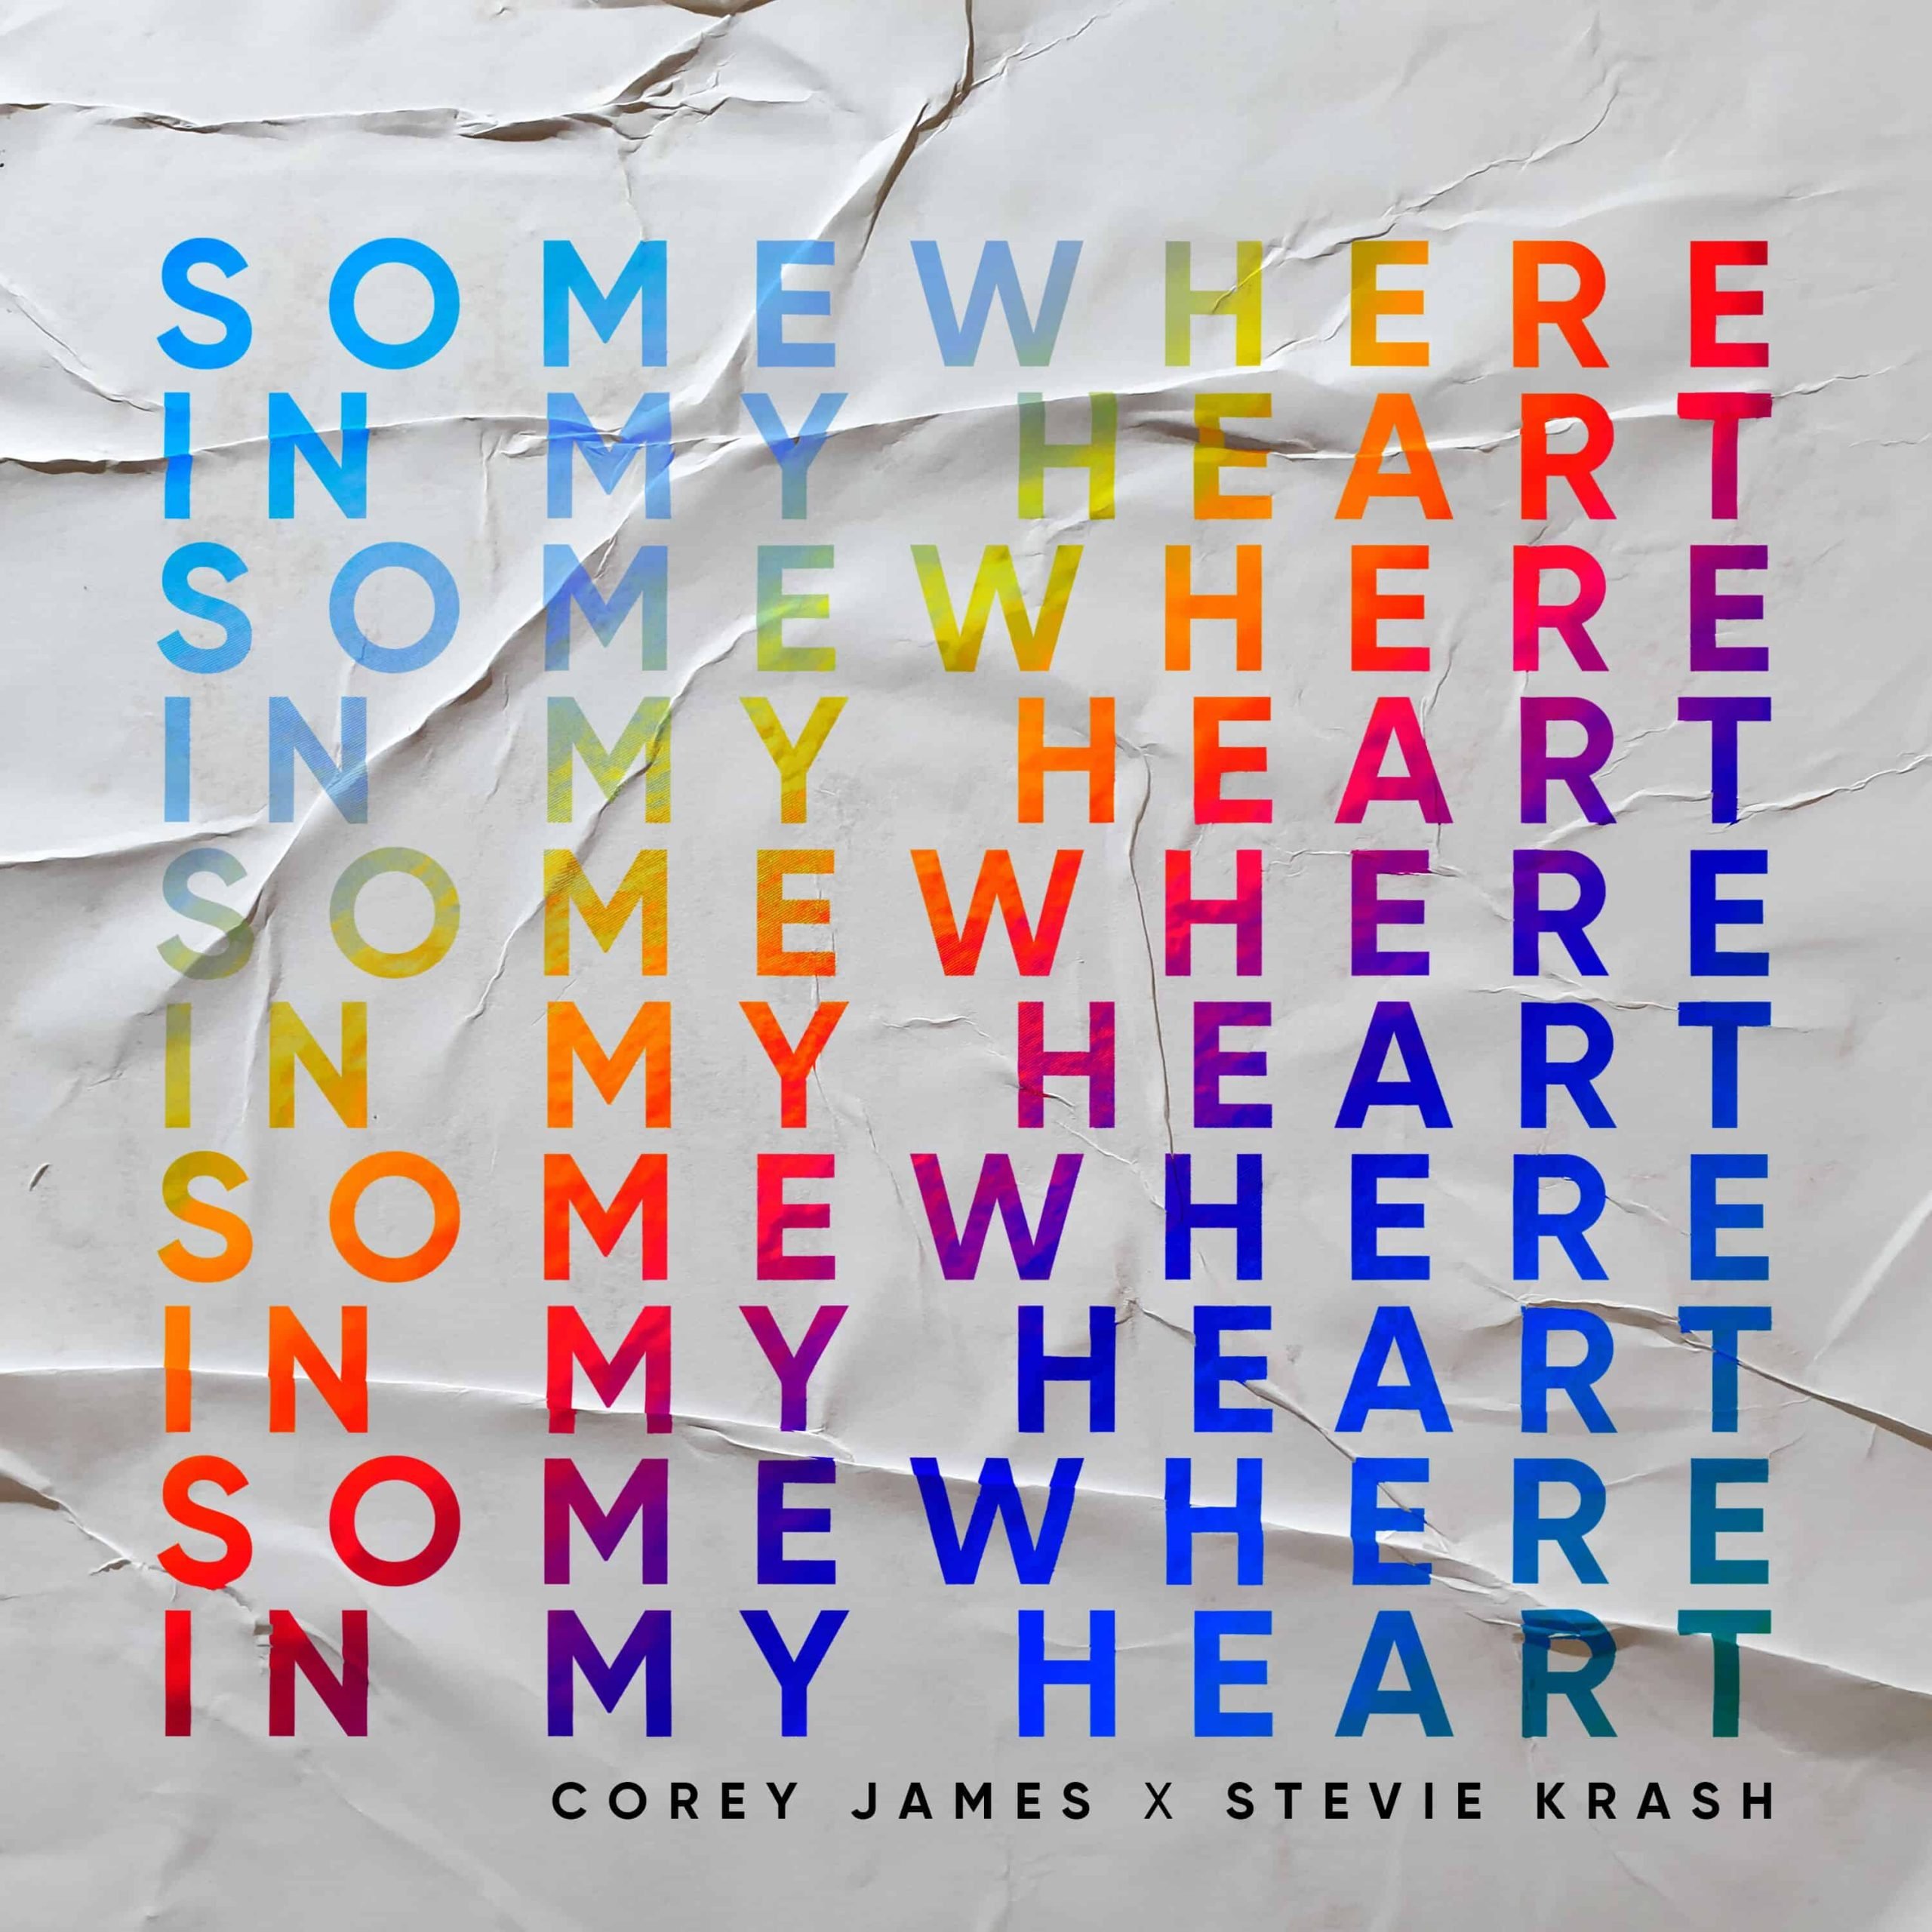 Corey James & Stevie Krash – Somewhere In My Heart